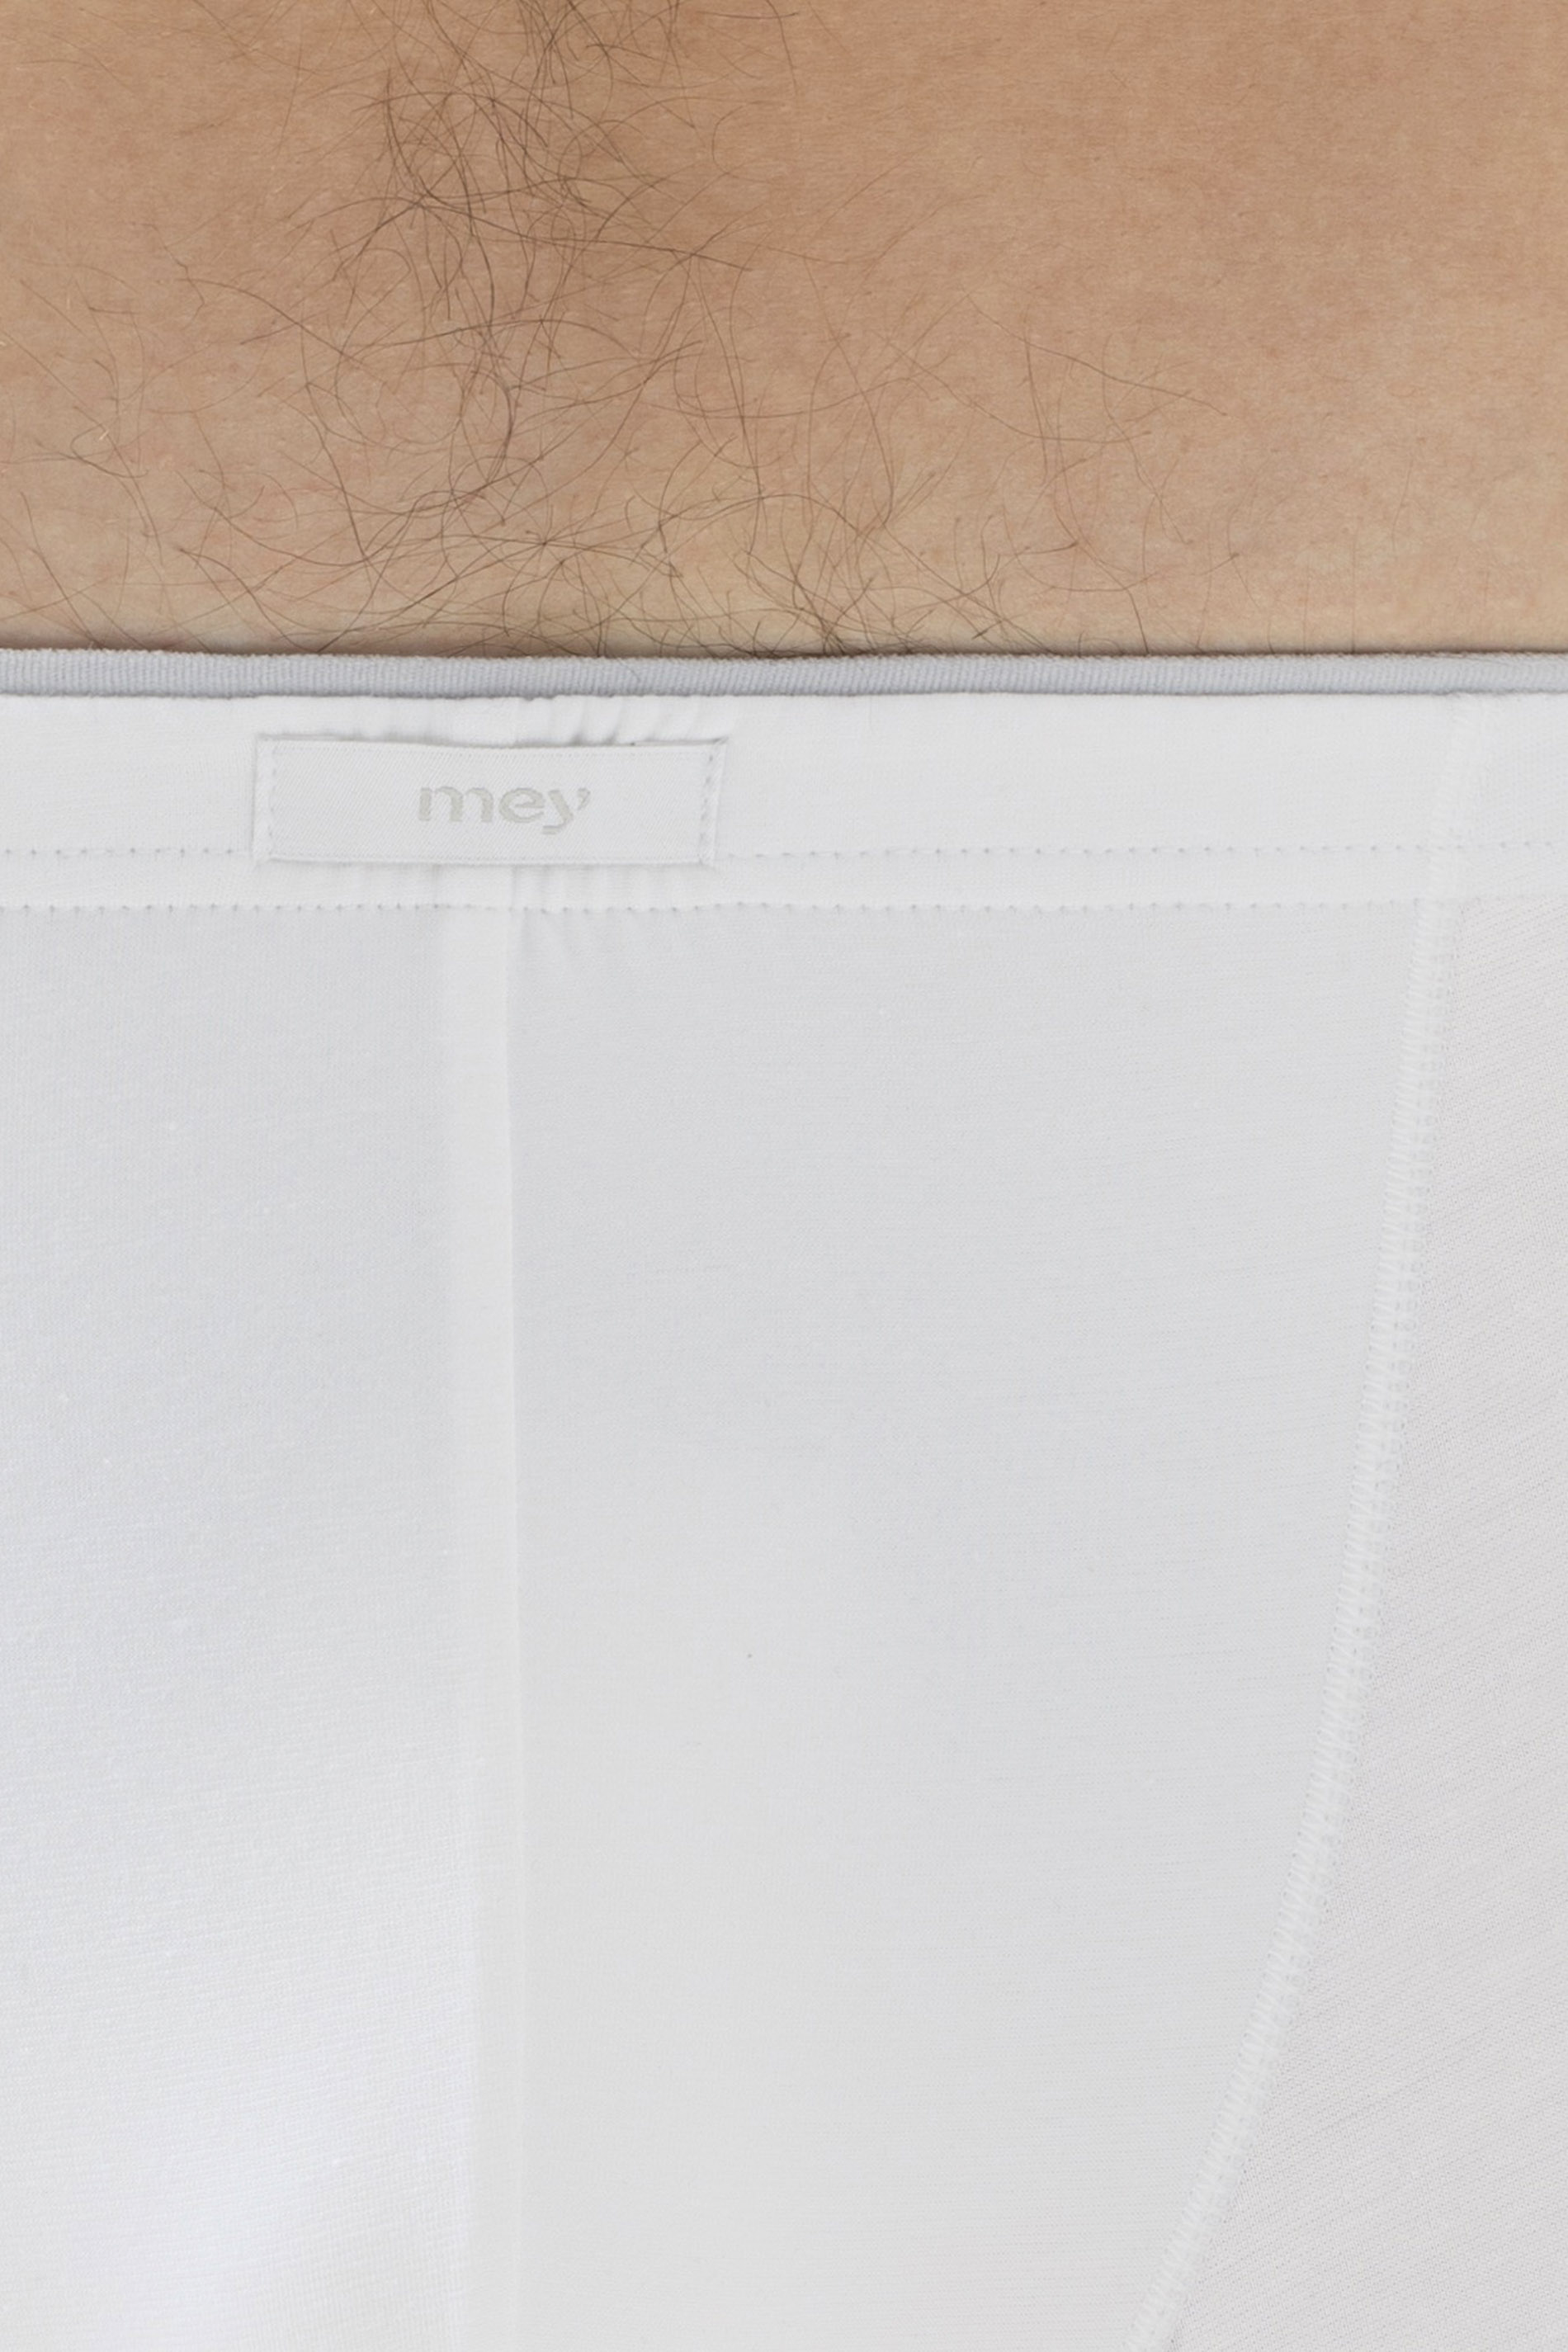 Shorty White Serie Dry Cotton Detail View 01 | mey®